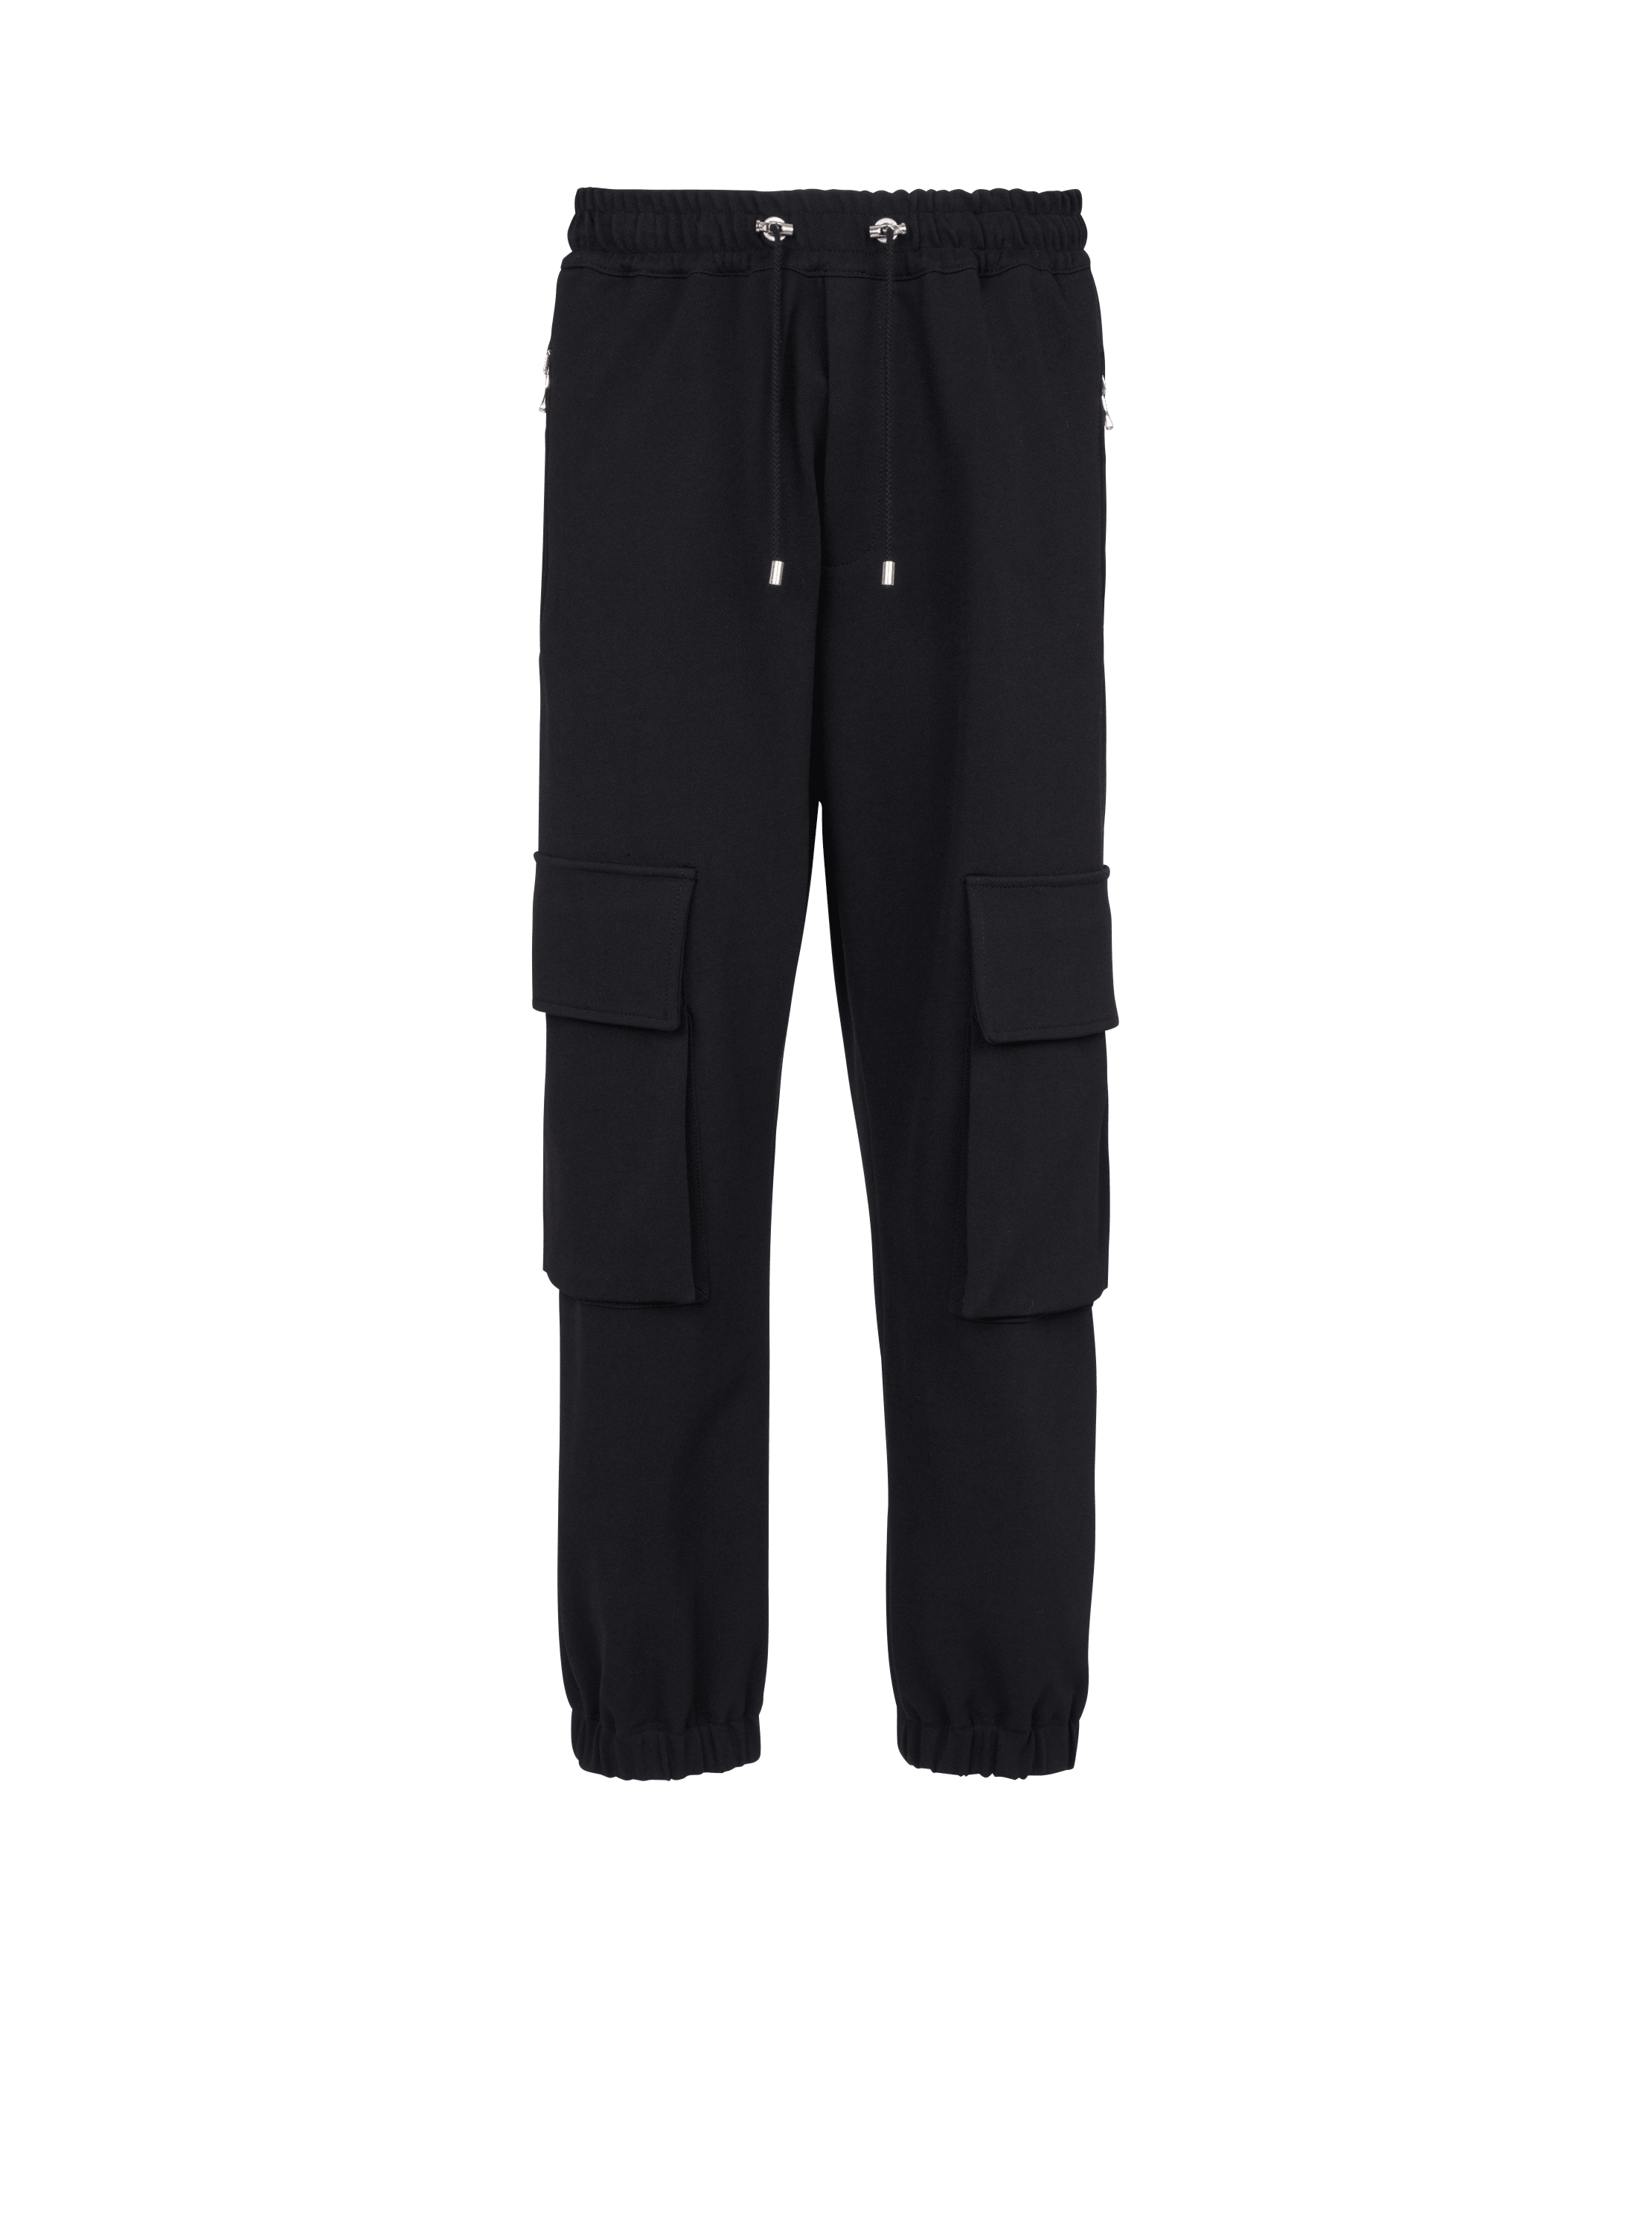 Cotton cargo trousers, black, hi-res